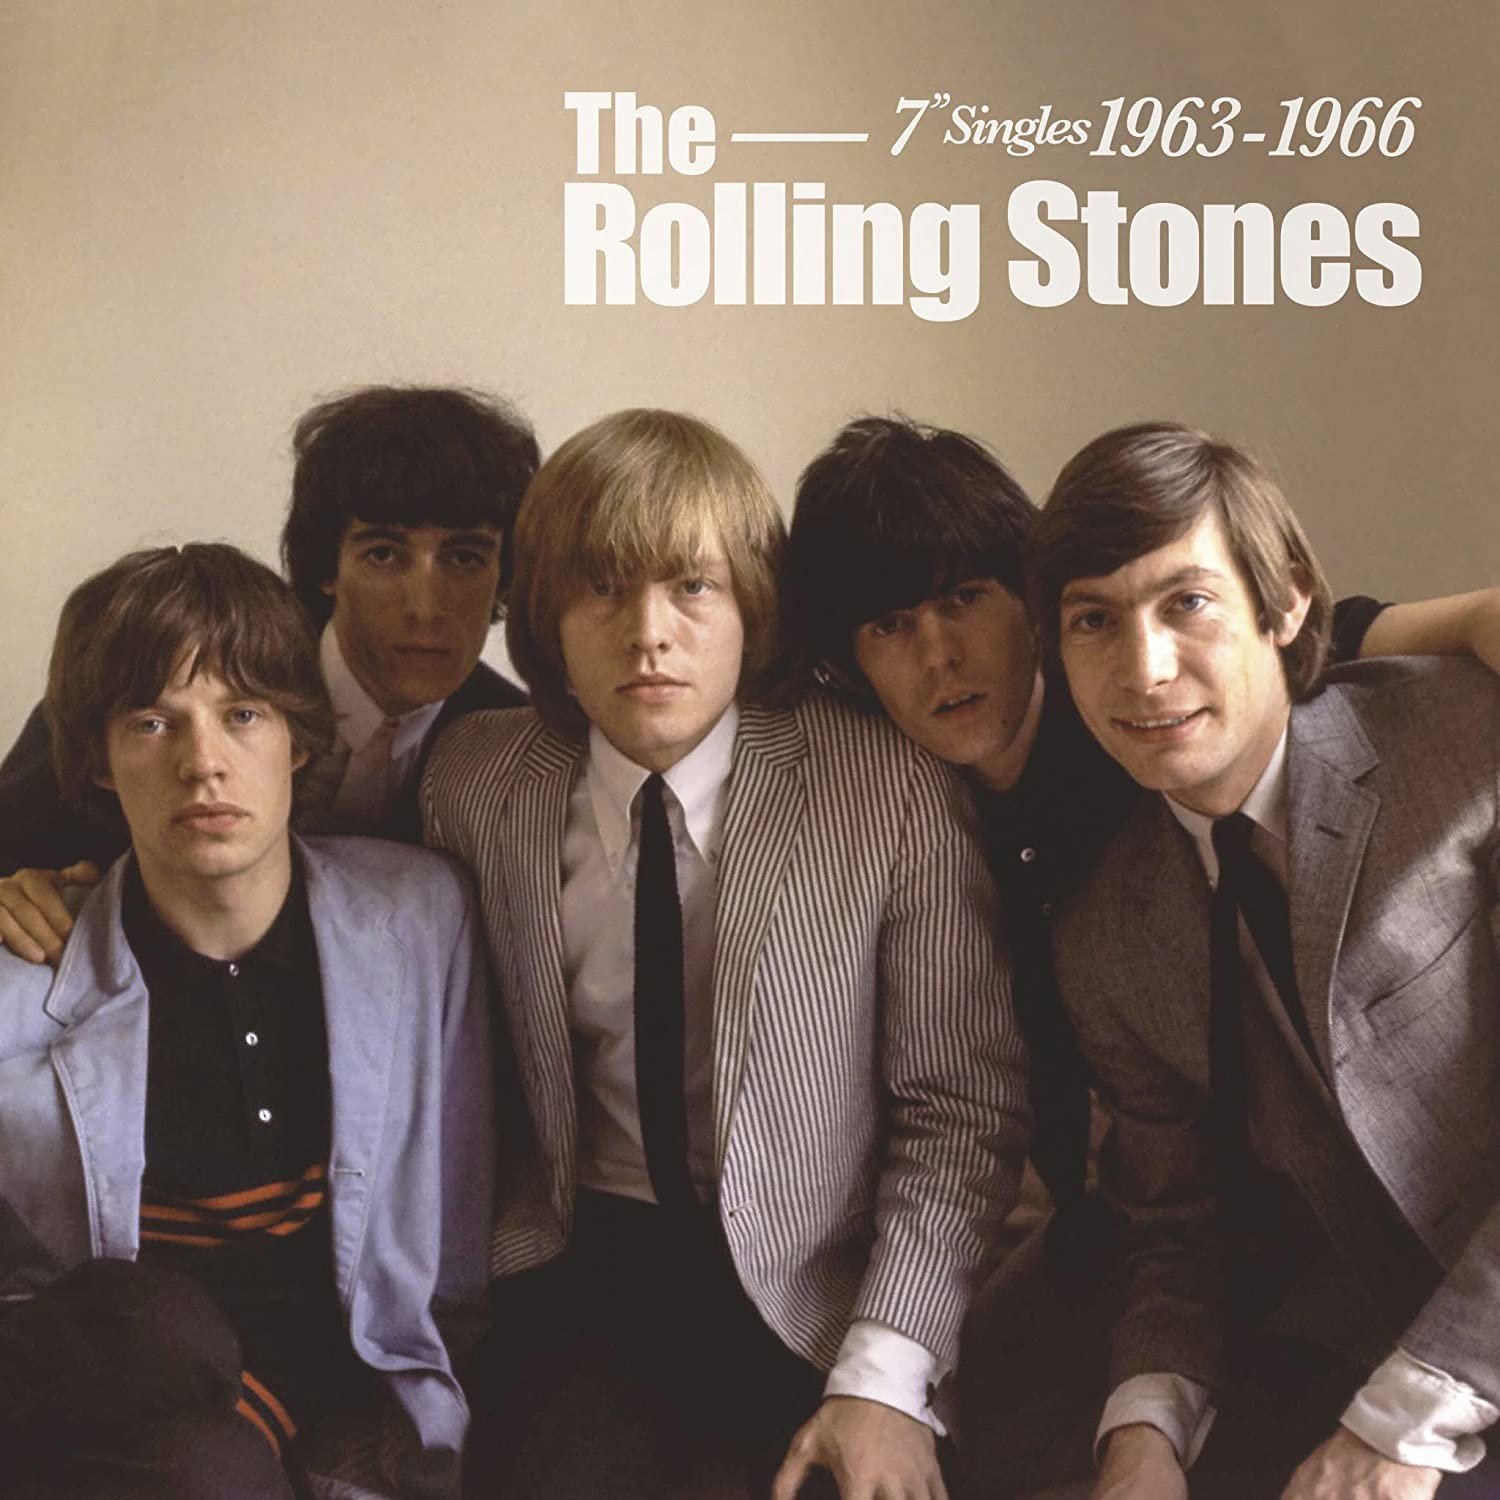 The Rolling Stones - 7" Singles 1963-1966 (18X7") (SV)